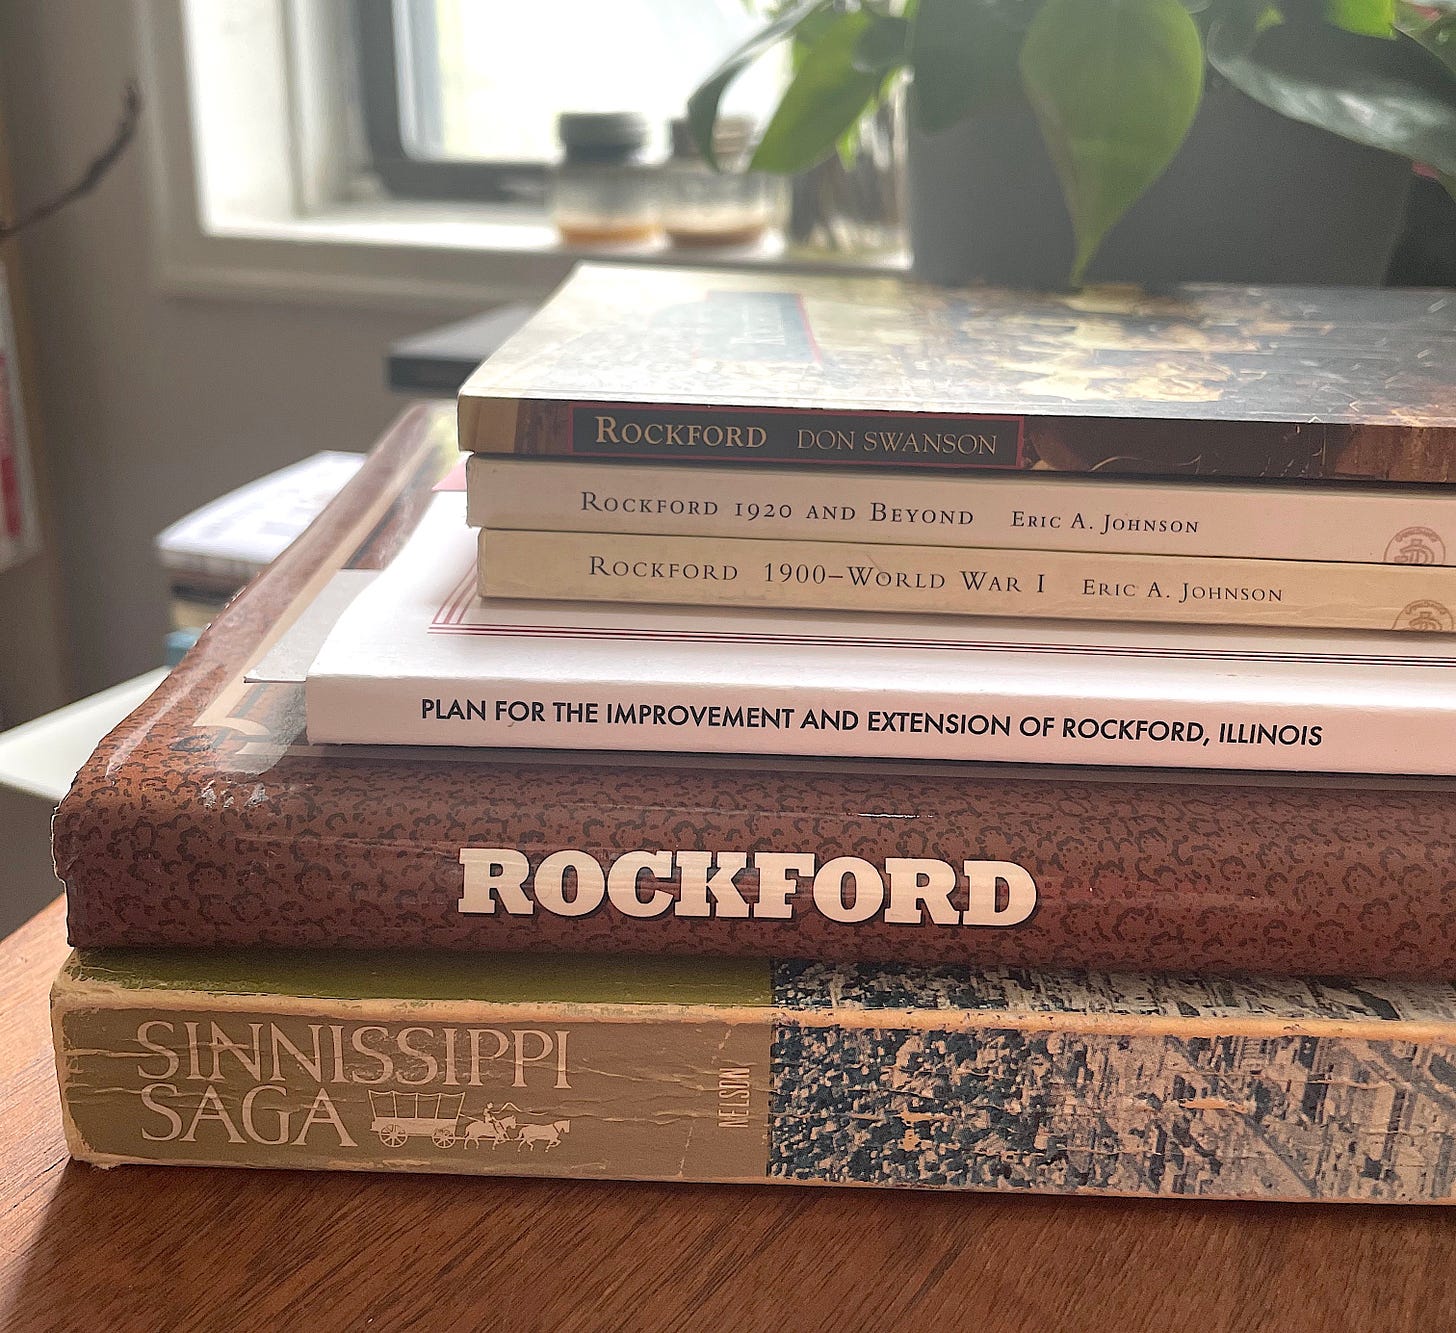 Rockford books